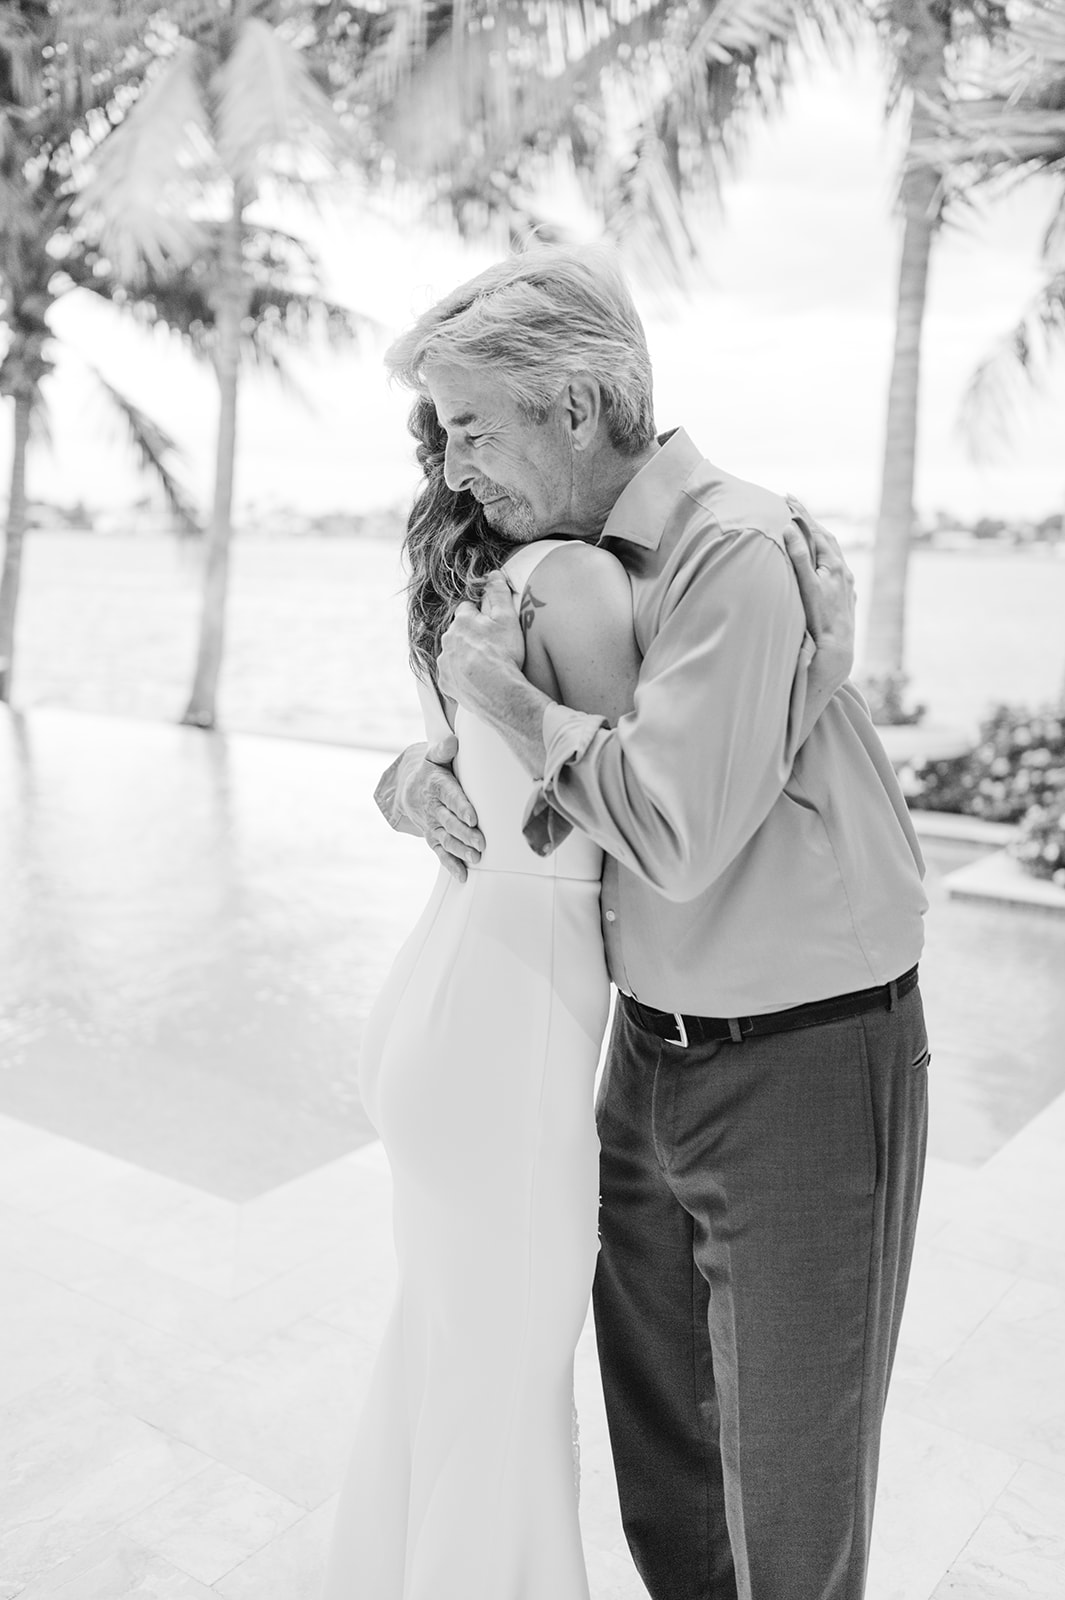 Naples Florida wedding photographer captures the happy couple during their romantic portrait session
